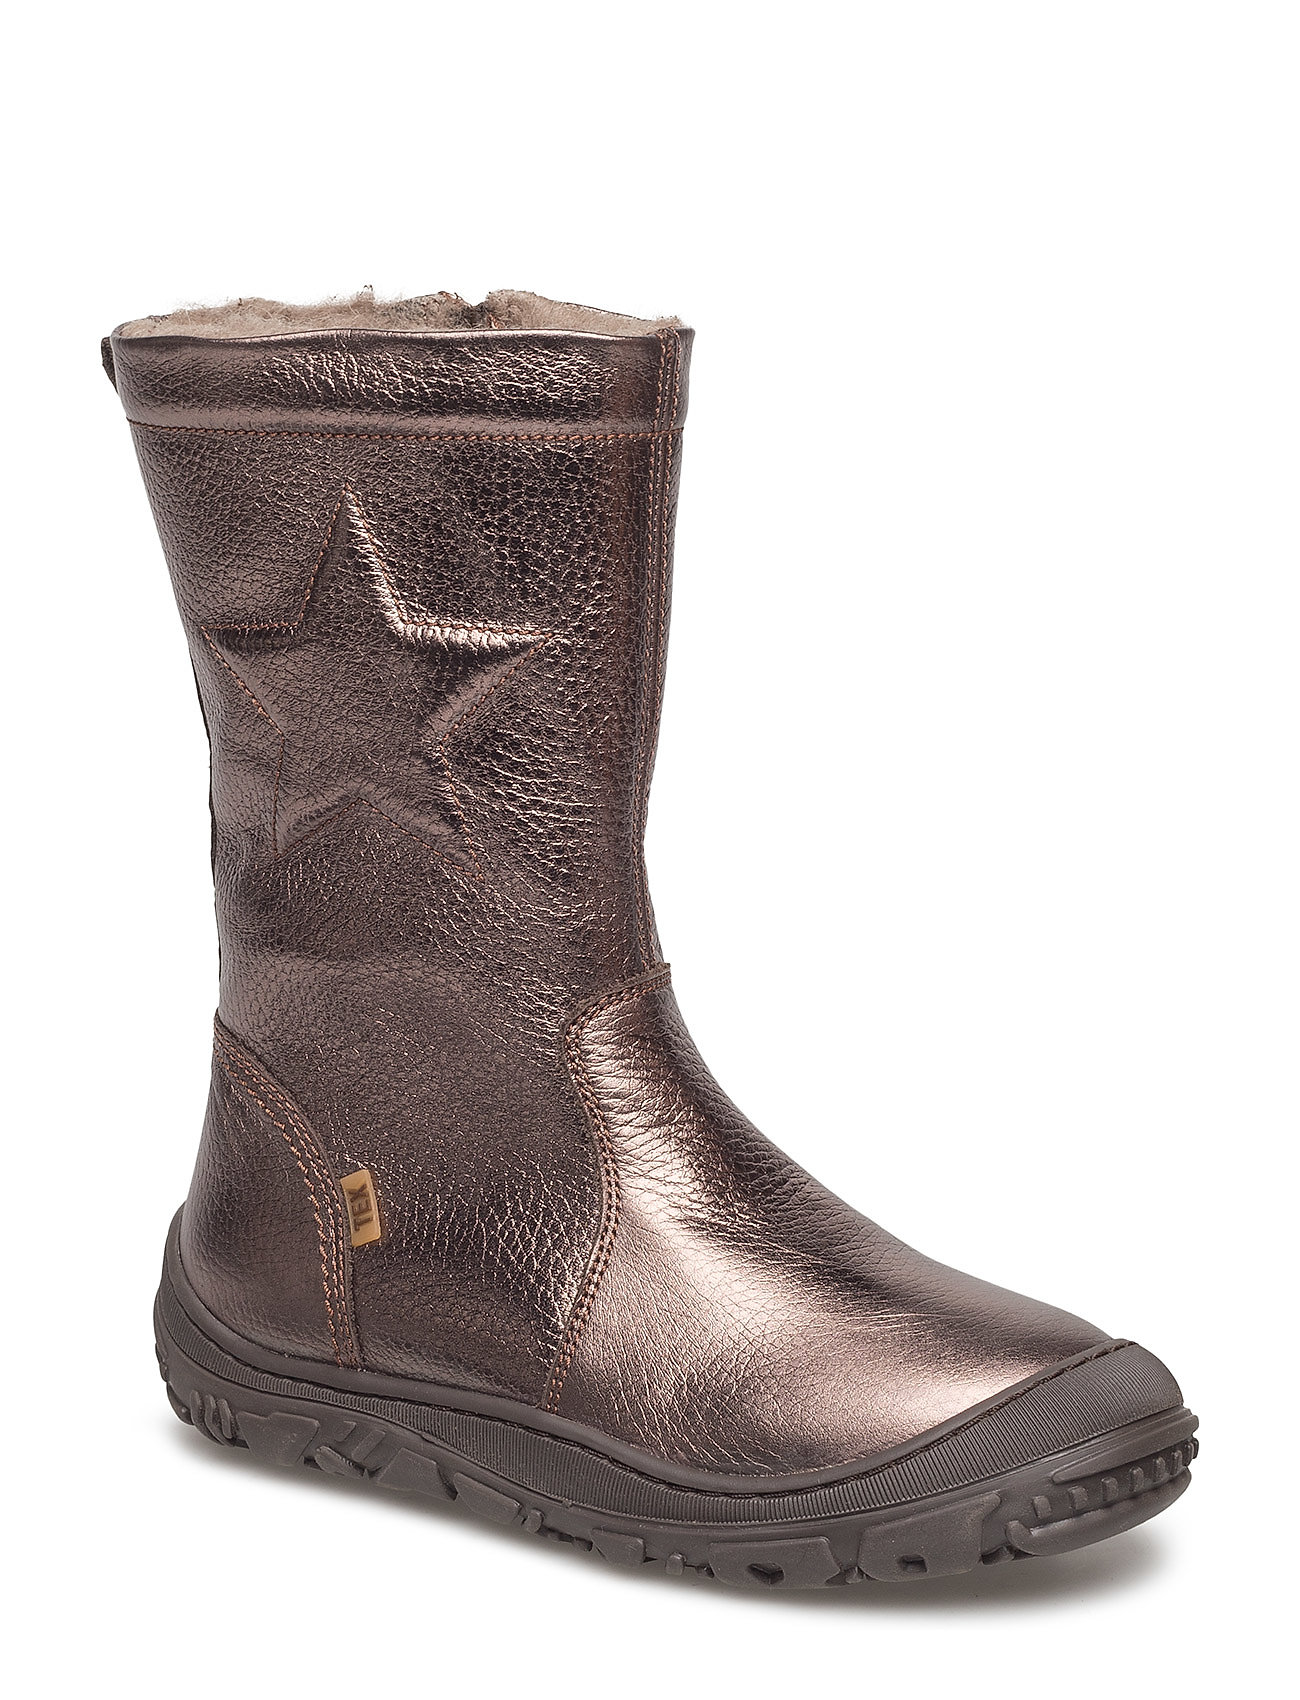 winter boot styles 218